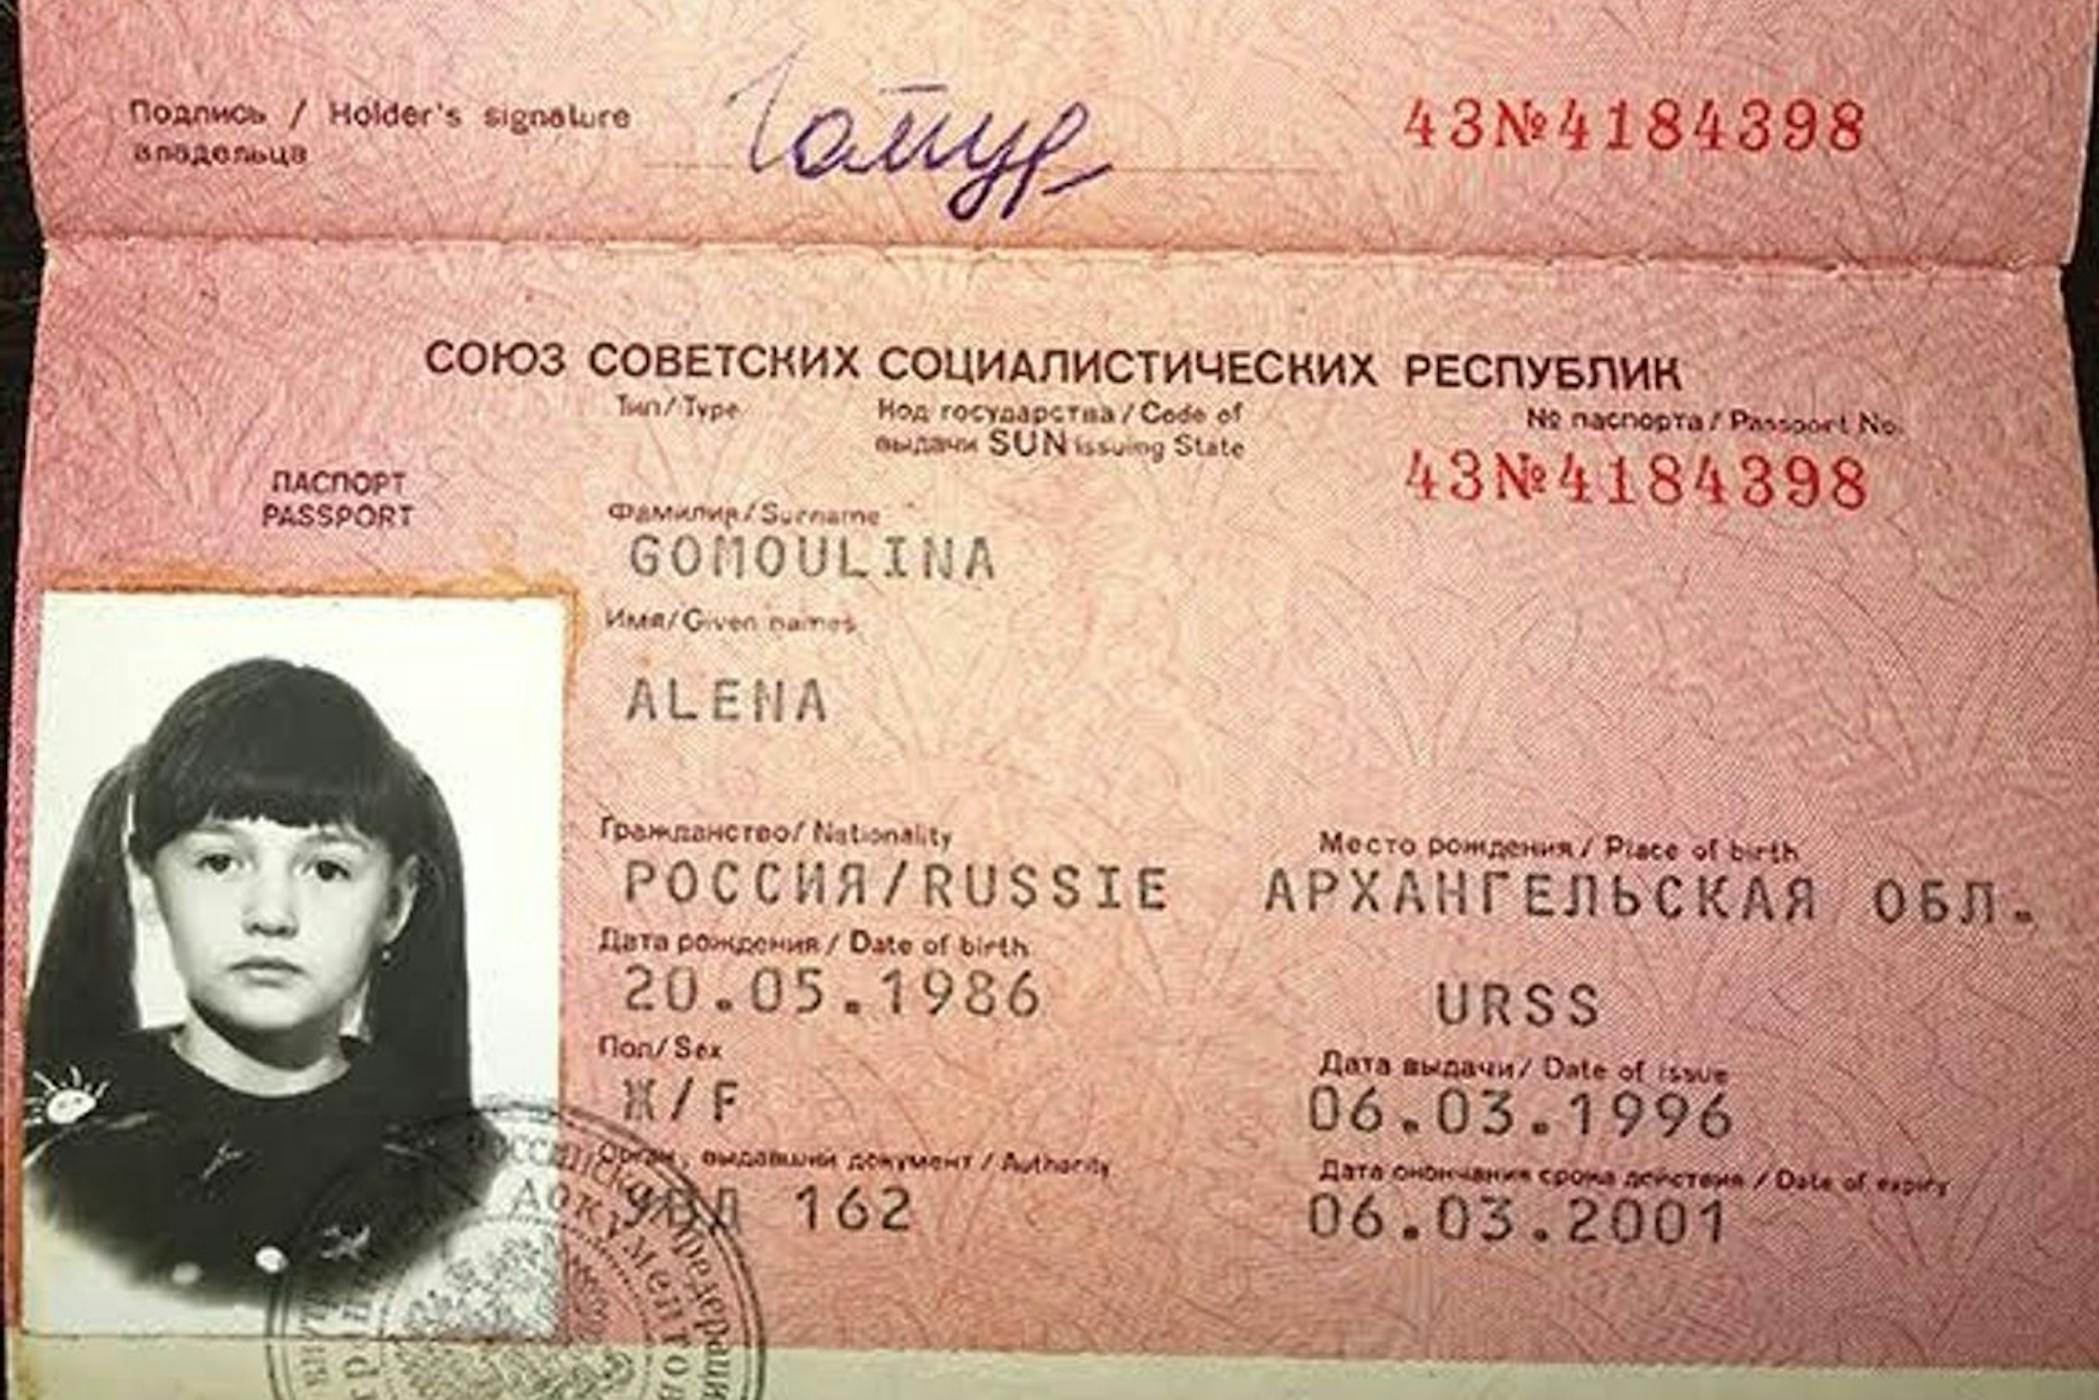 Alena Akselrod's former USSR passport, issued 1996